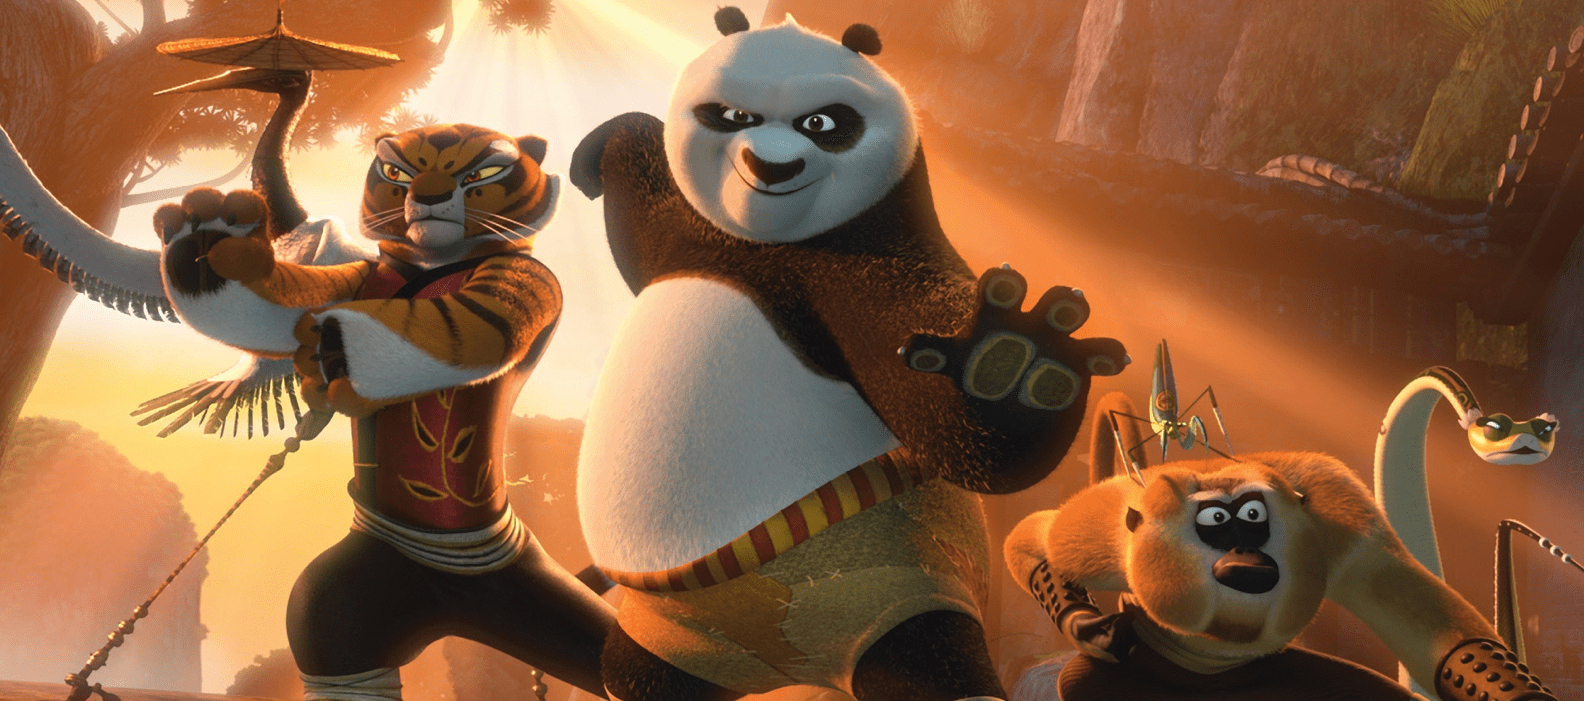 destaque da semana panda kung fu panda 2 10